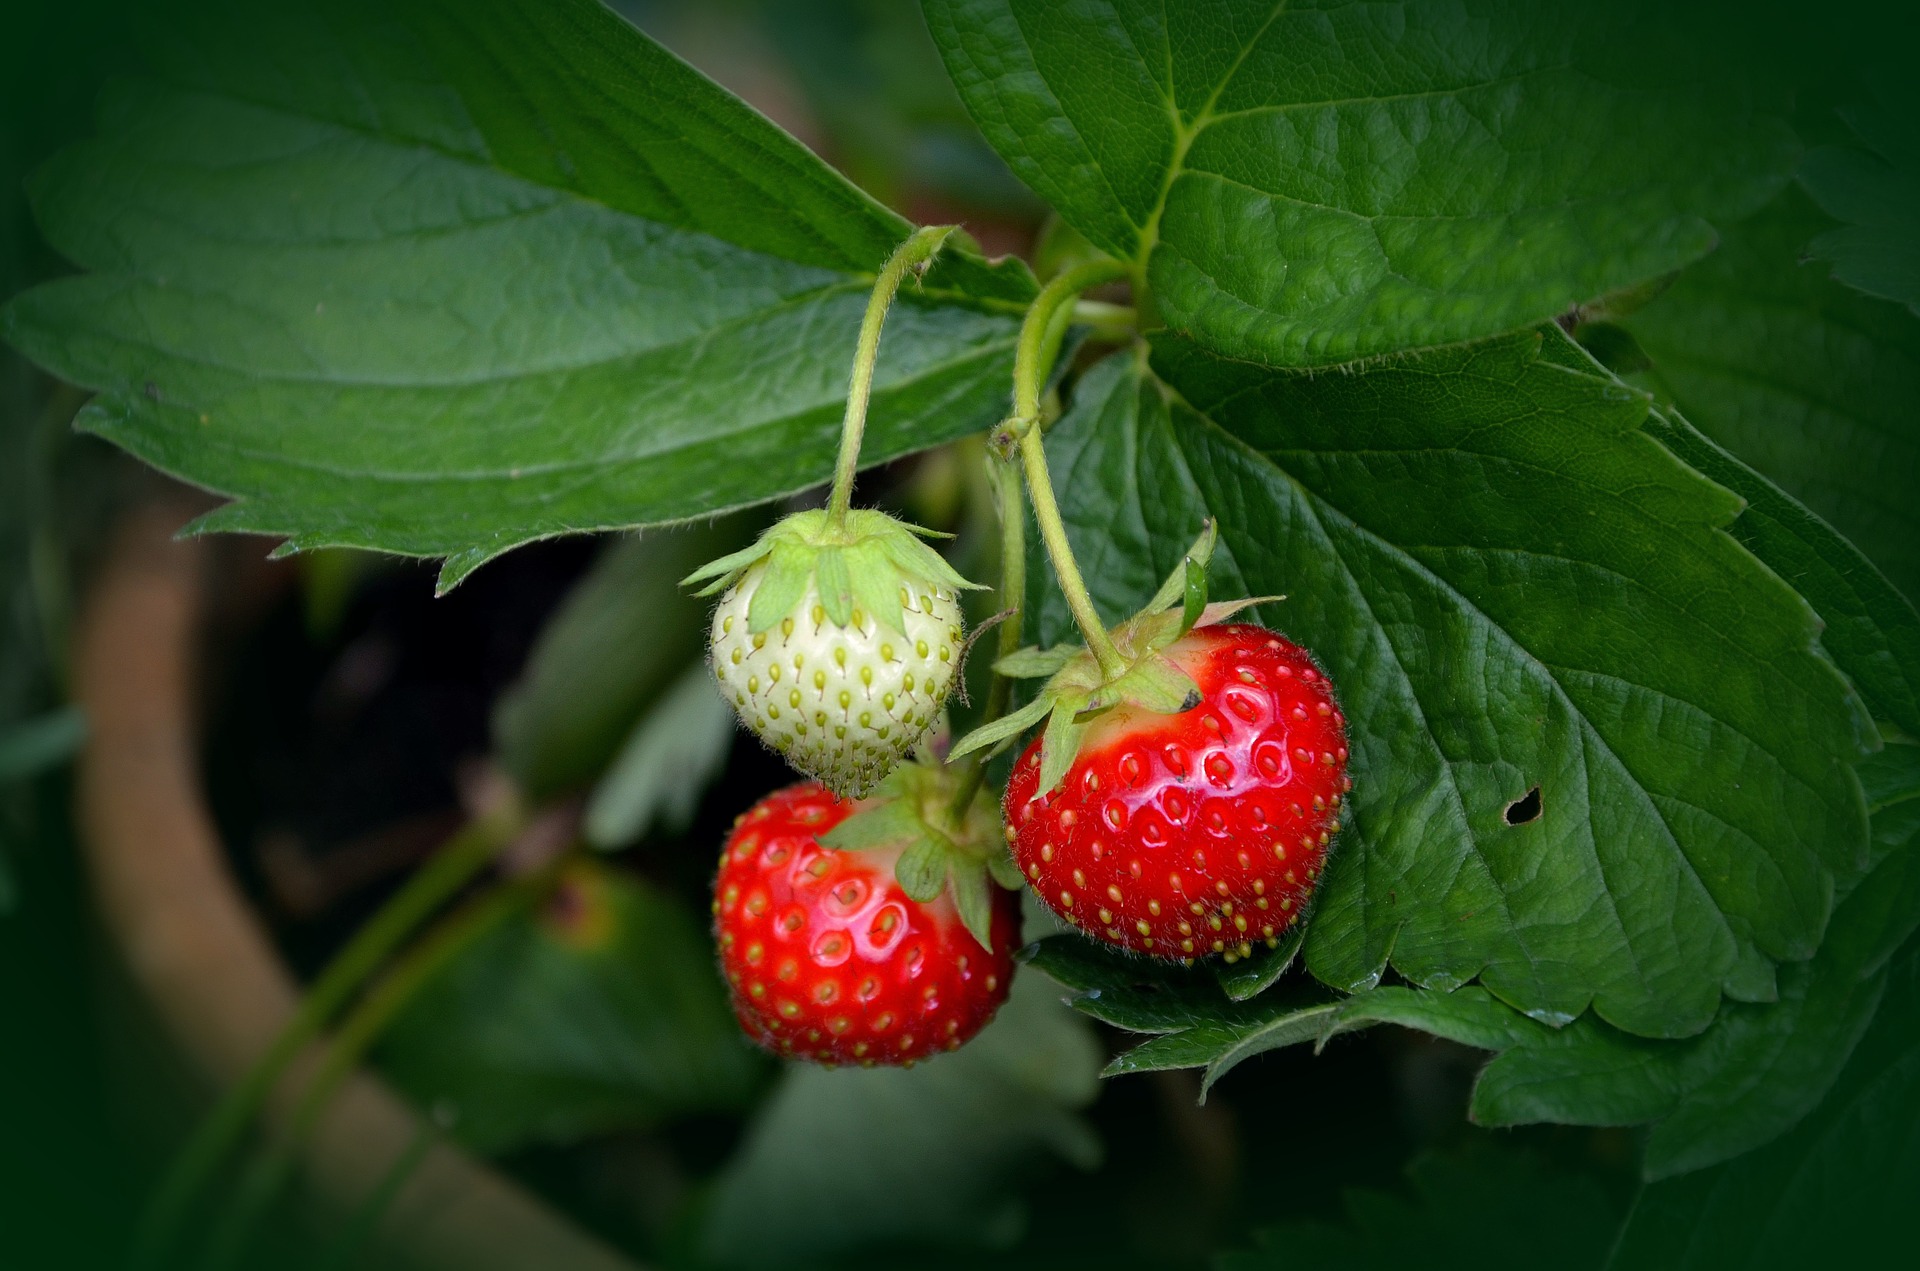 uploads/images/strawberry-plant-751178_1920.jpg